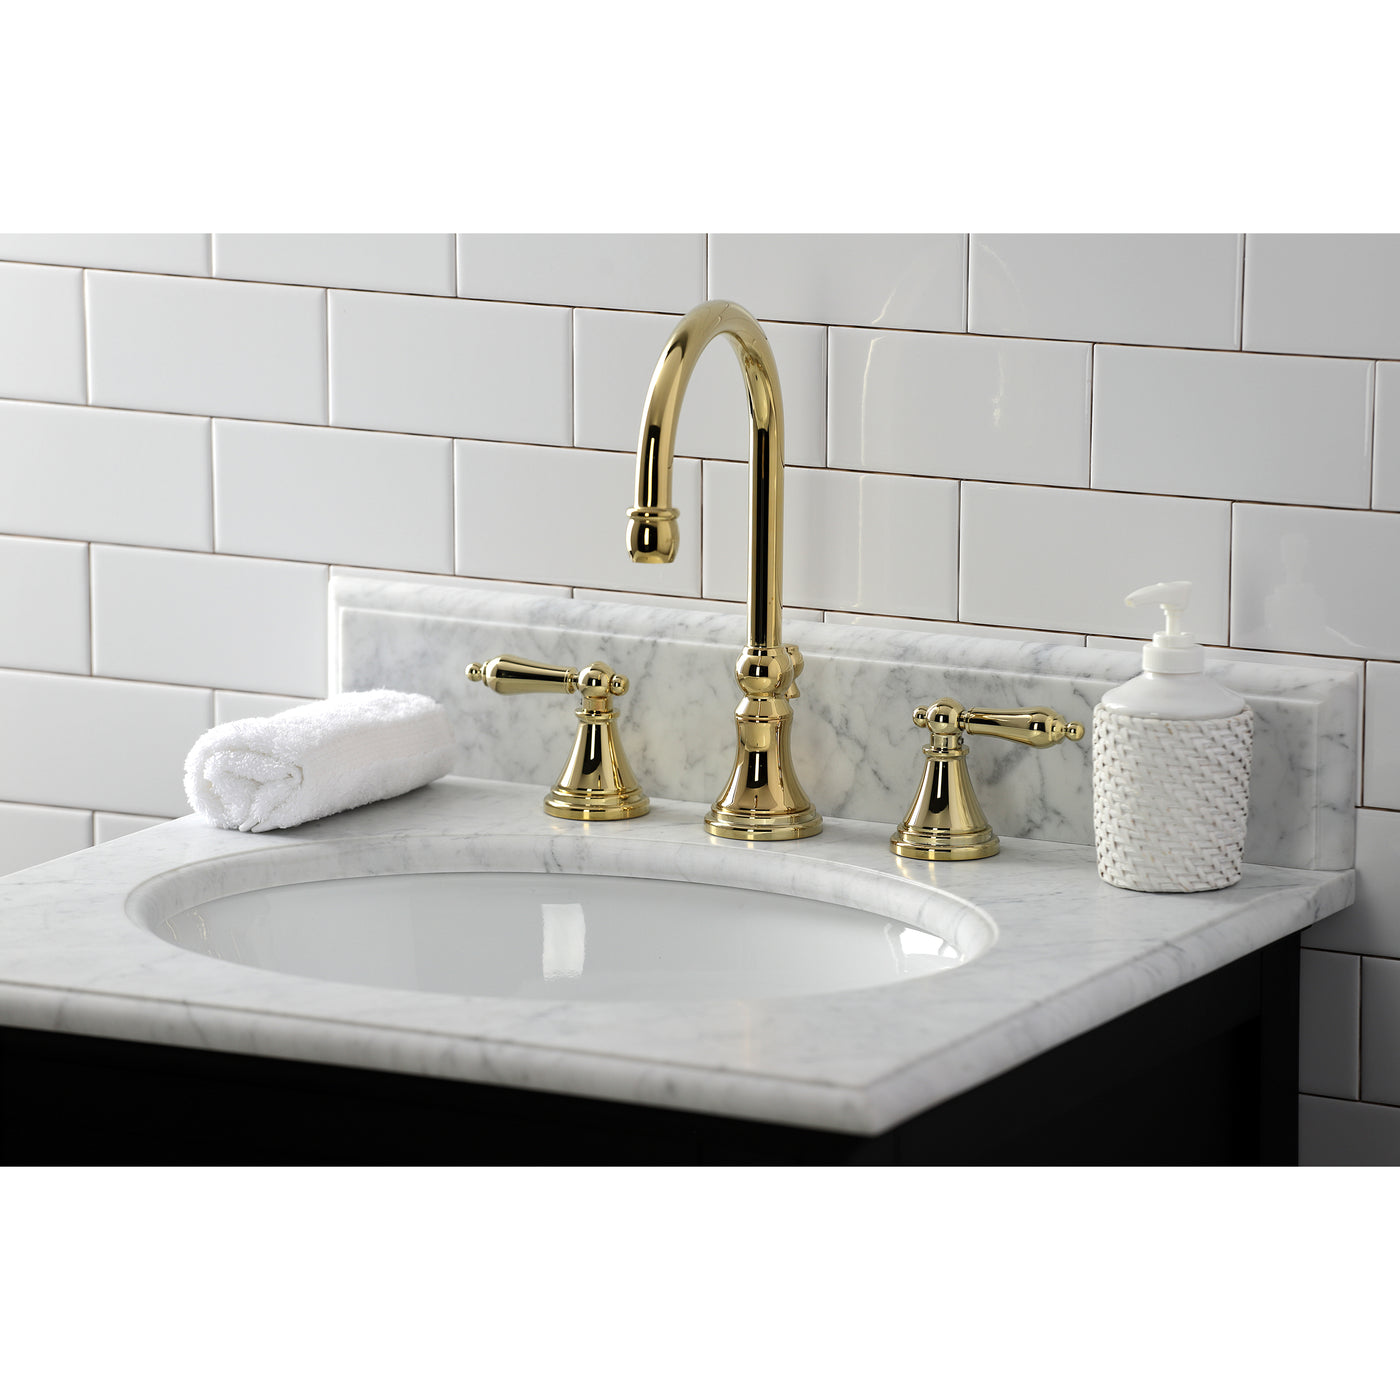 Elements of Design ES2982AL Widespread Bathroom Faucet, Polished Brass